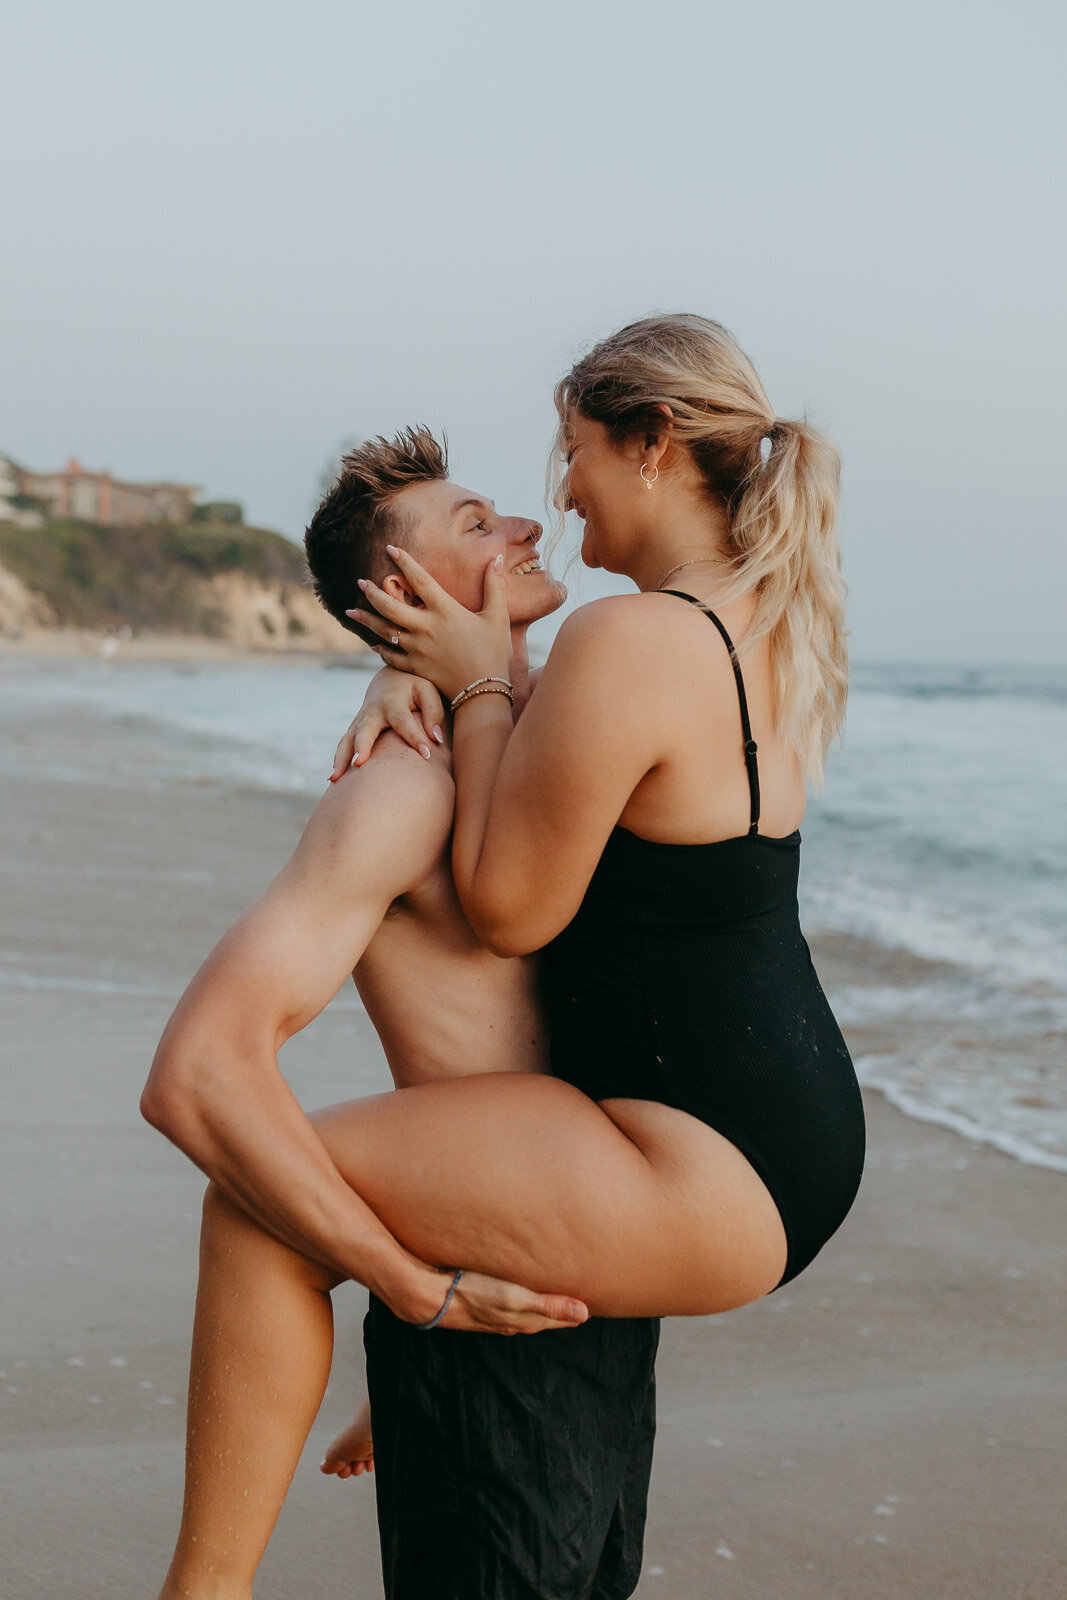 Lexx-Creative-Orange-County-Corona-Beach-Swimsuit-Engagement-22